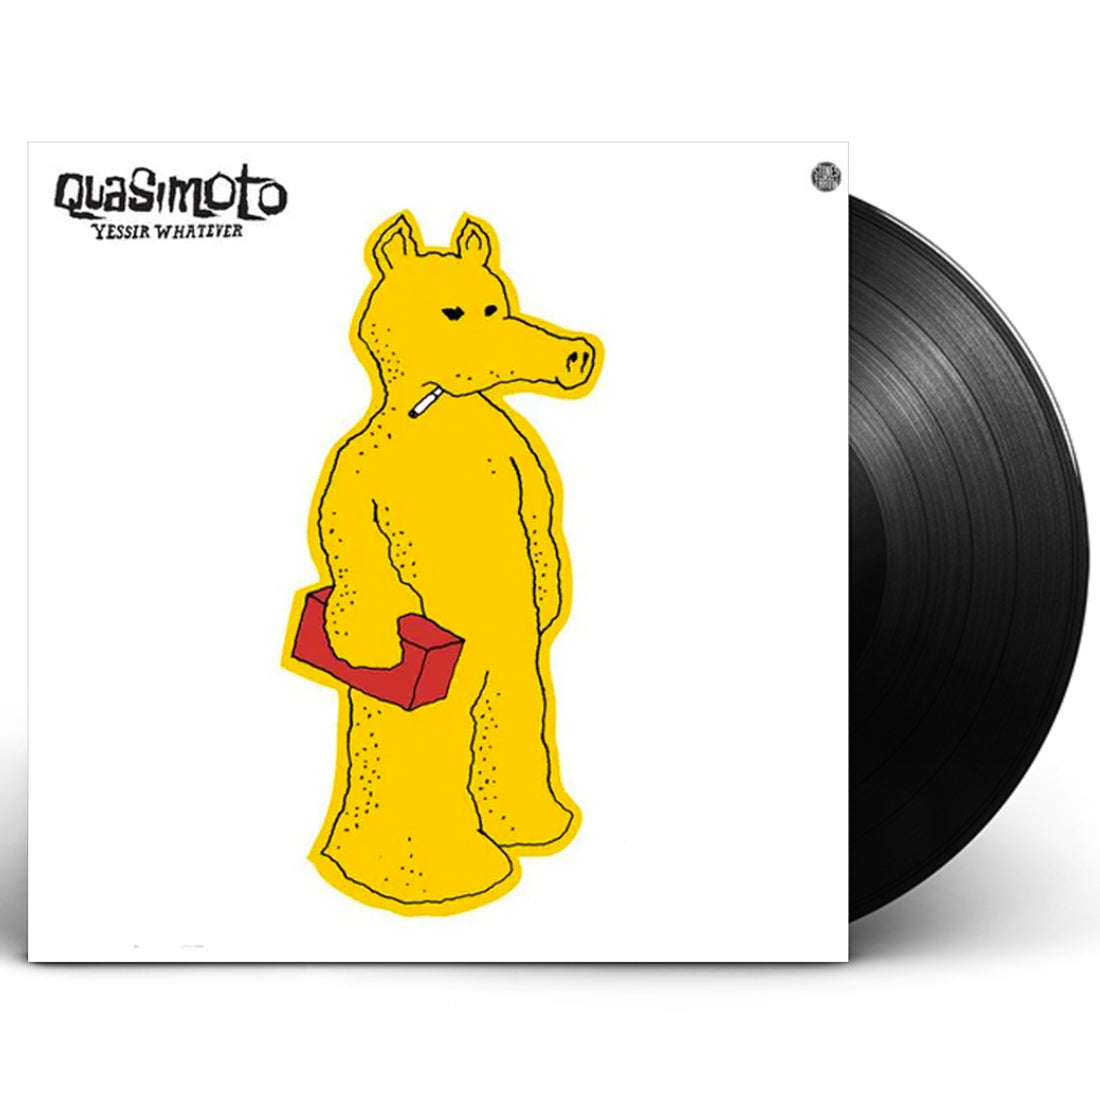 Quasimoto "Yessir Whatever" LP Vinyl